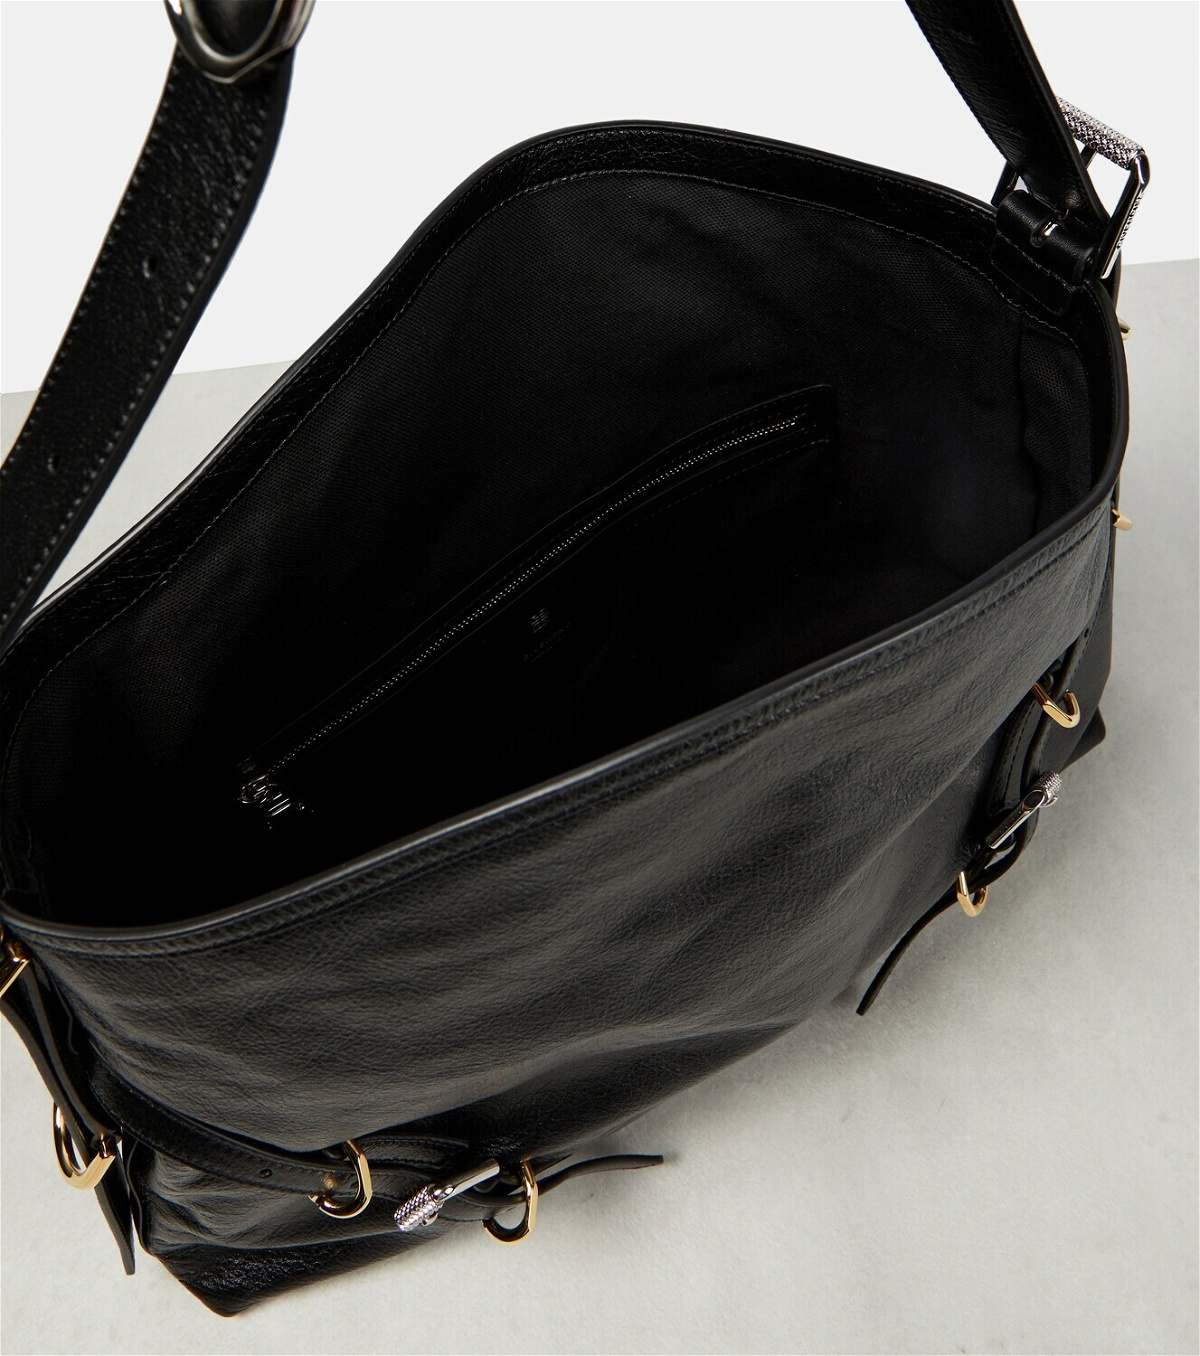 Givenchy - Voyou Medium leather shoulder bag Givenchy